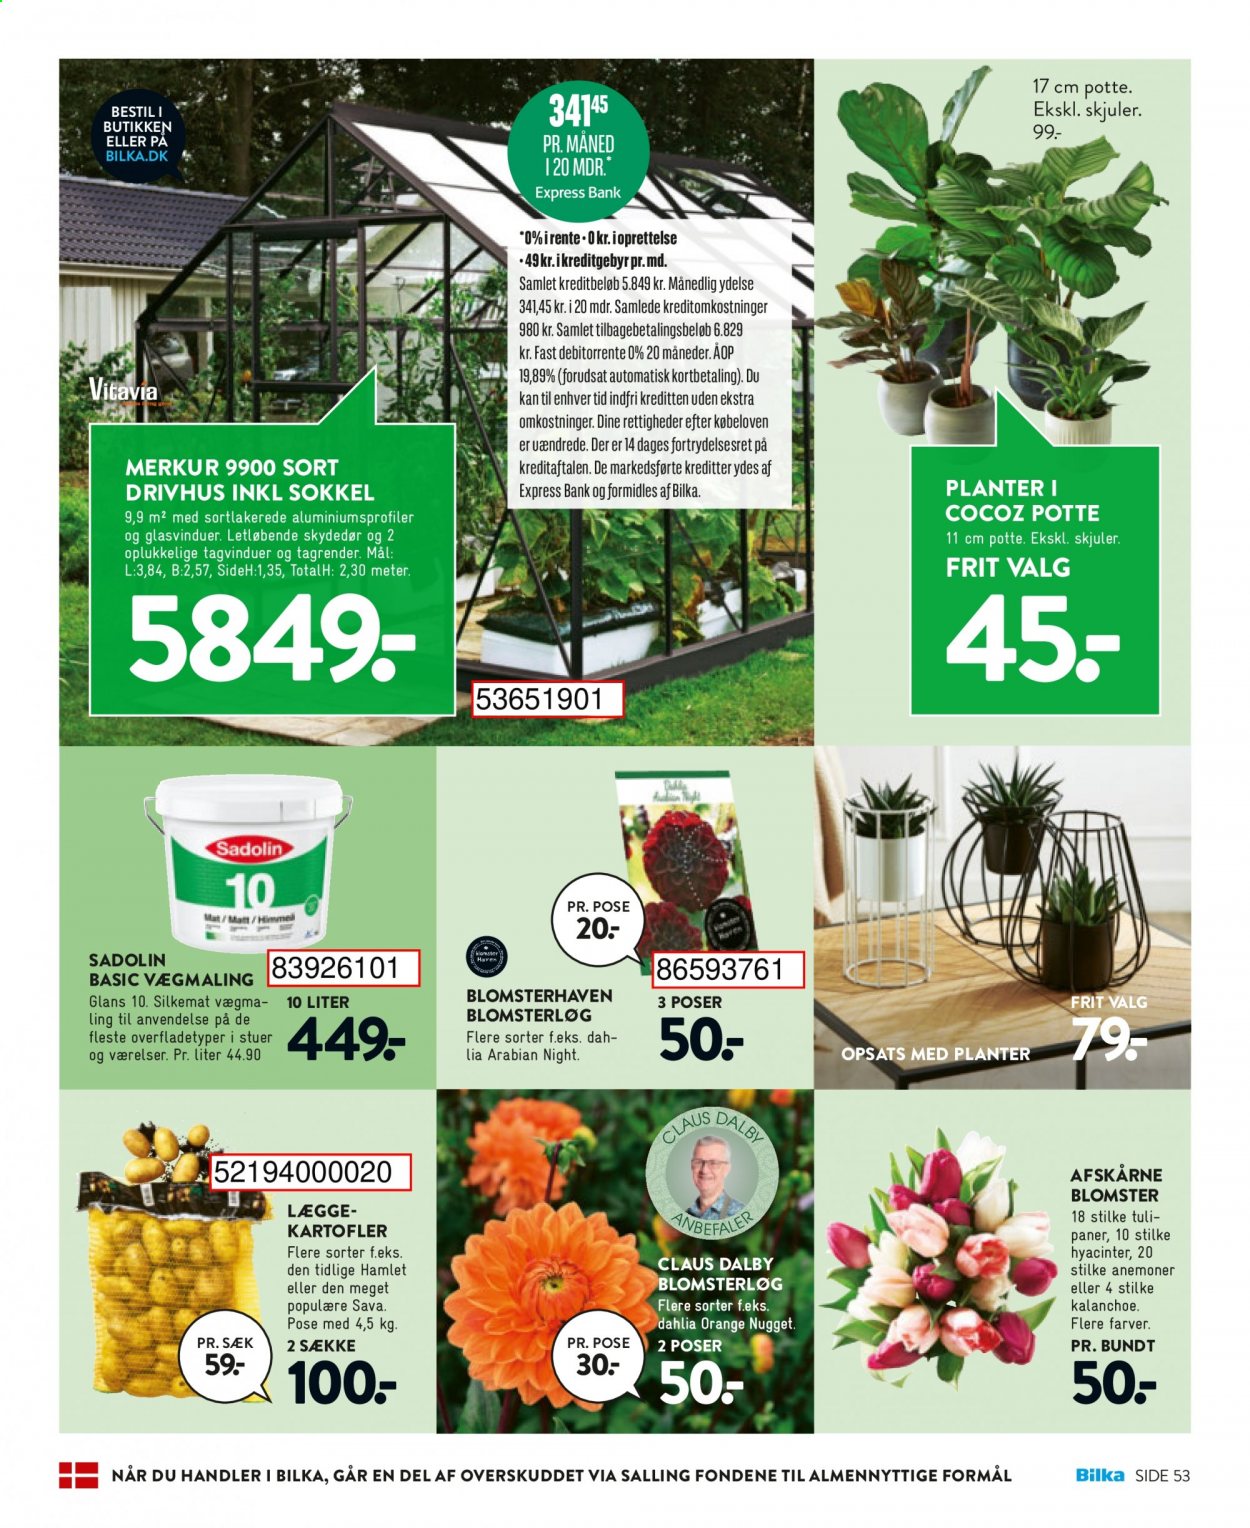 thumbnail - Bilka tilbud  - 26.2.2021 - 4.3.2021 - tilbudsprodukter - kartofler, drivhus, blomsterløg, kalanchoë, tulipaner. Side 55.